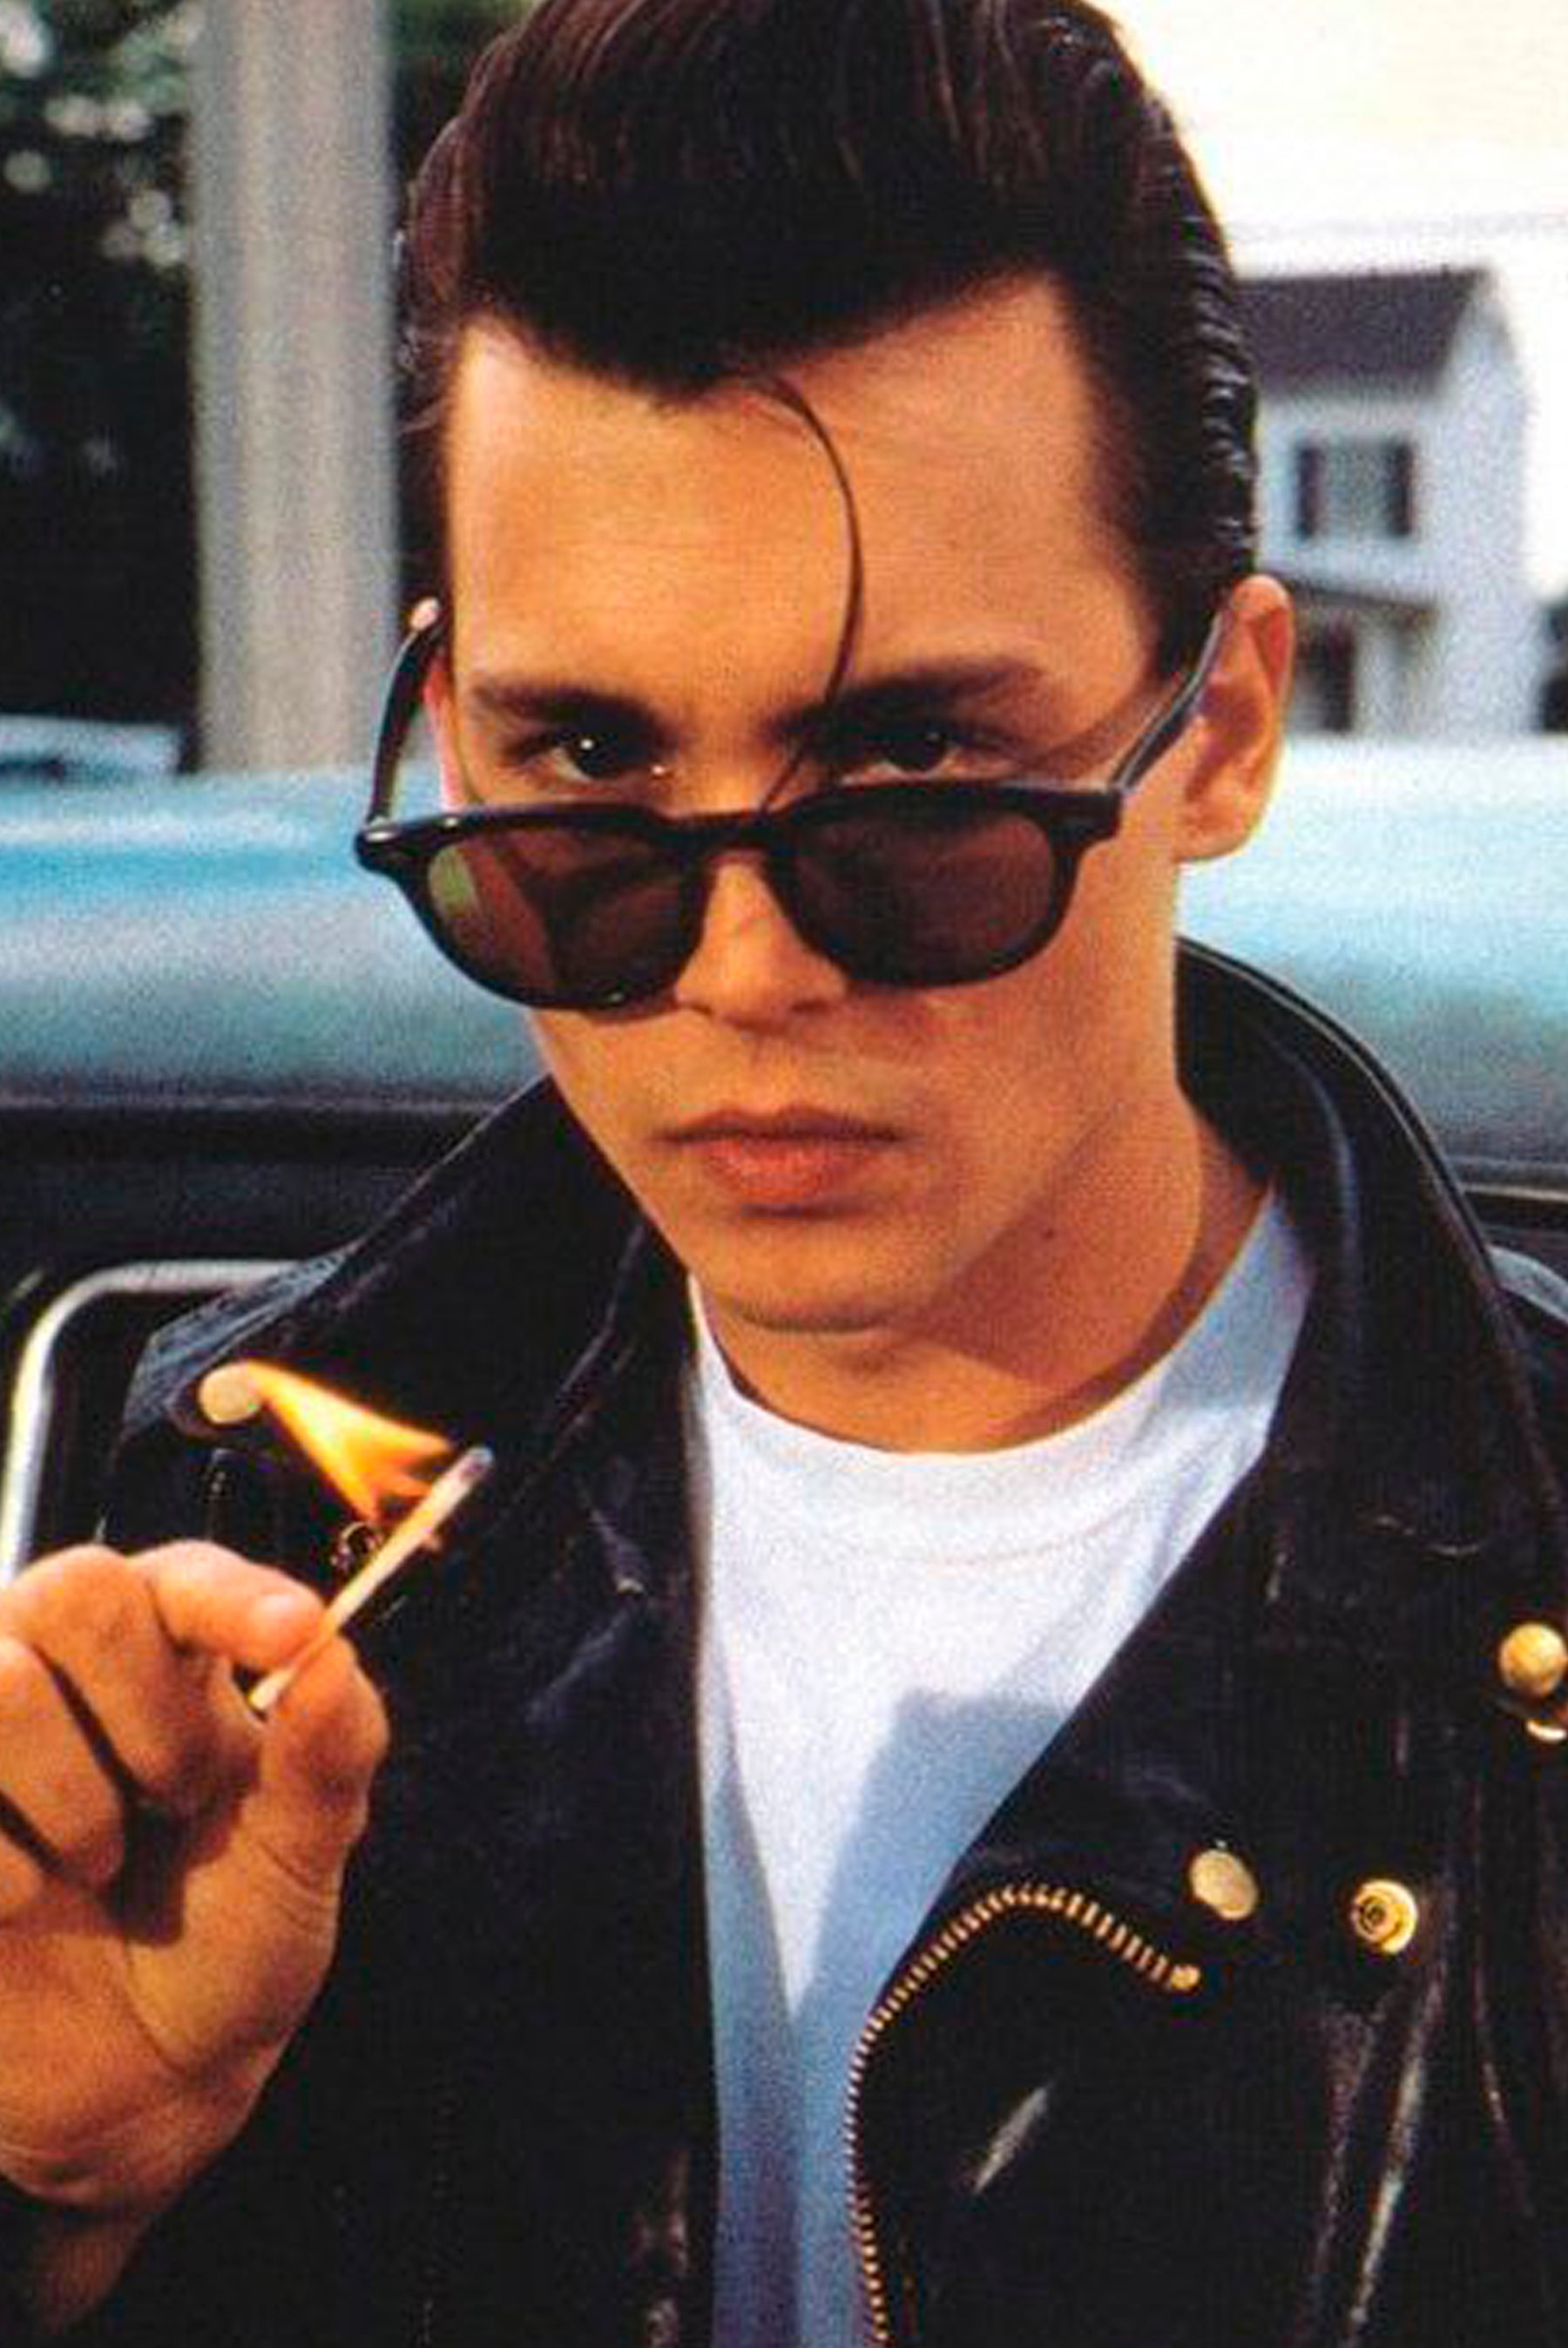 photo of Johnny Depp wearing sunglasses